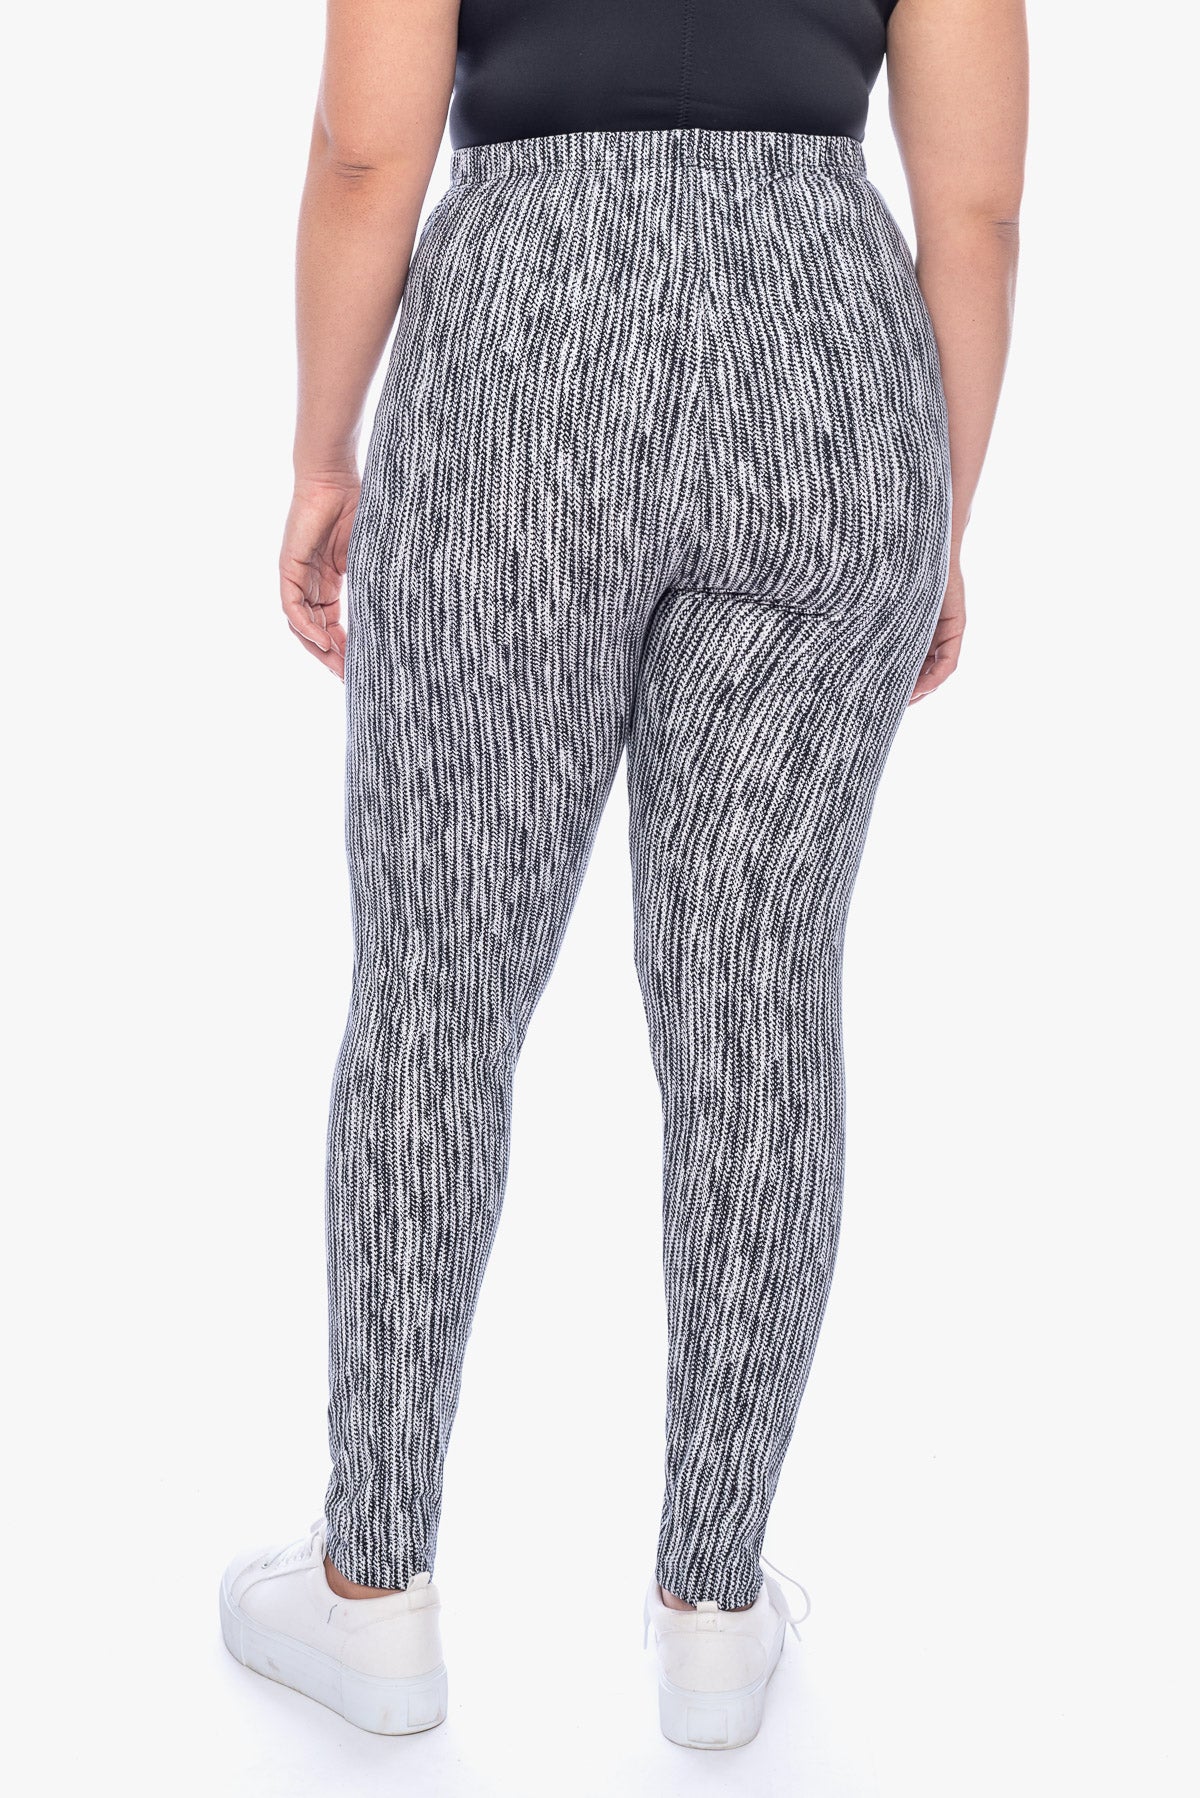 LILLY grey stripes leggings